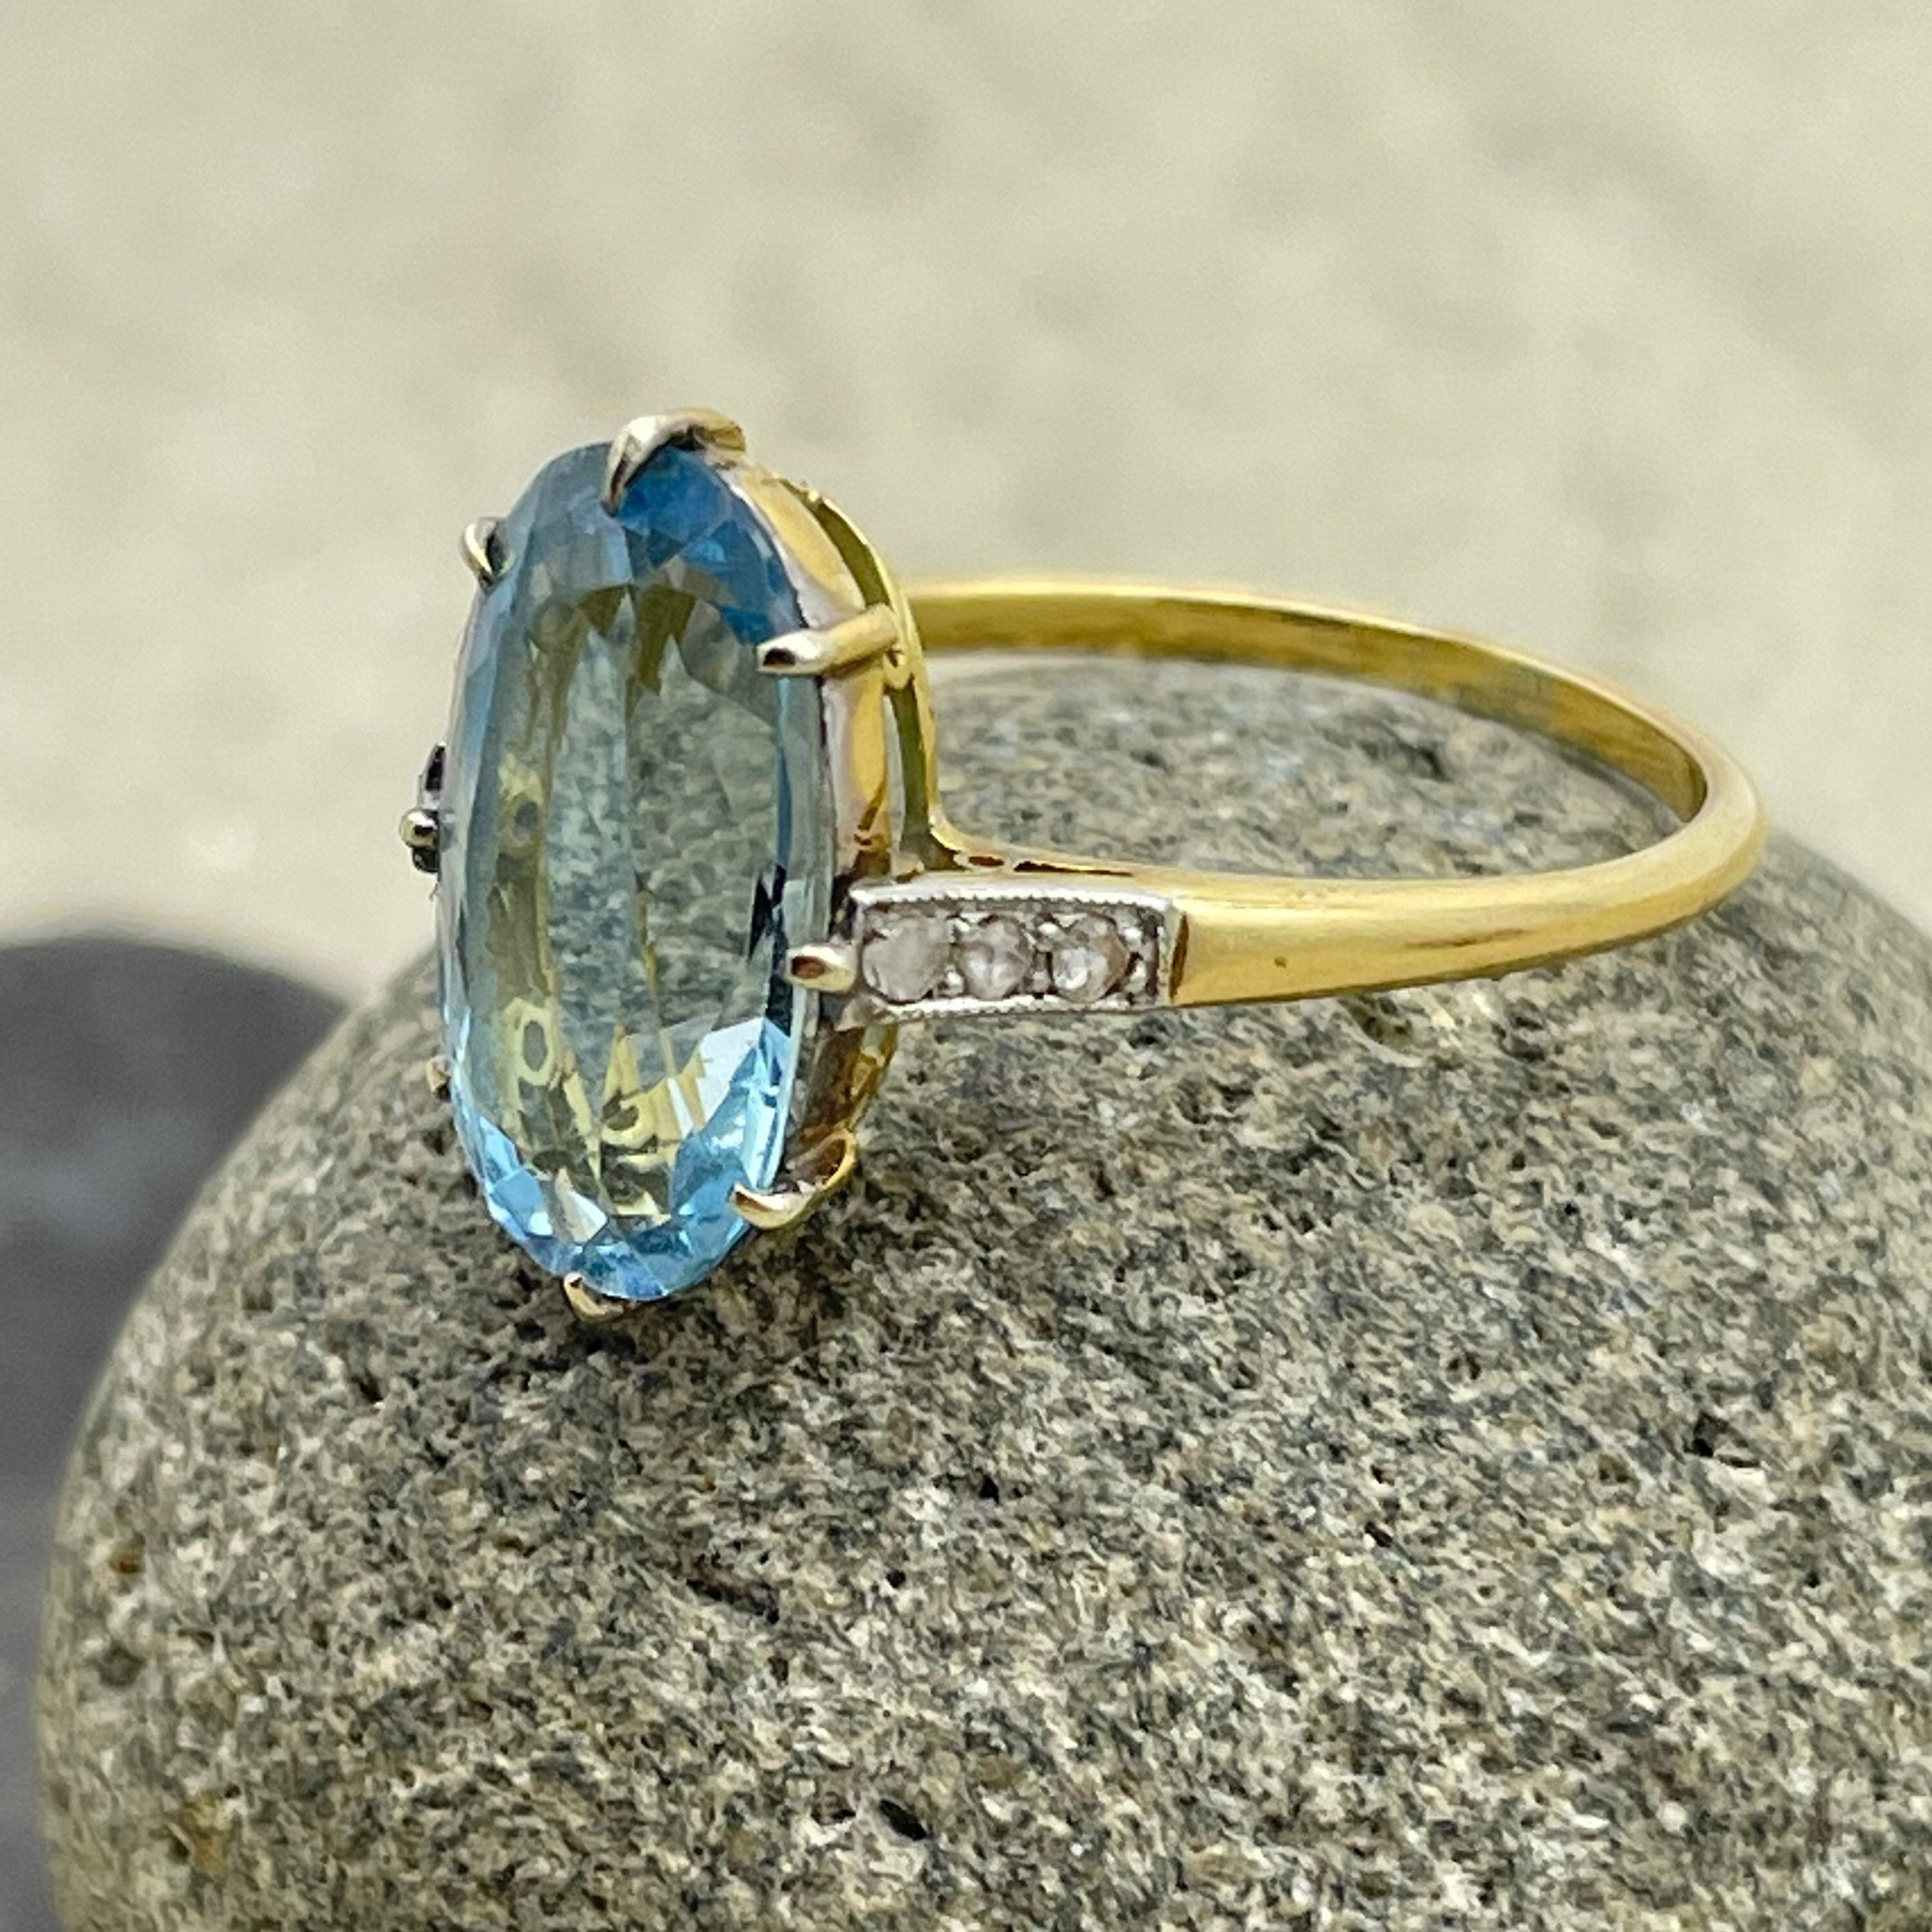 Art deco 18ct gold, aquamarine solitaire ring, with rose cut diamond shoulders, c1930s